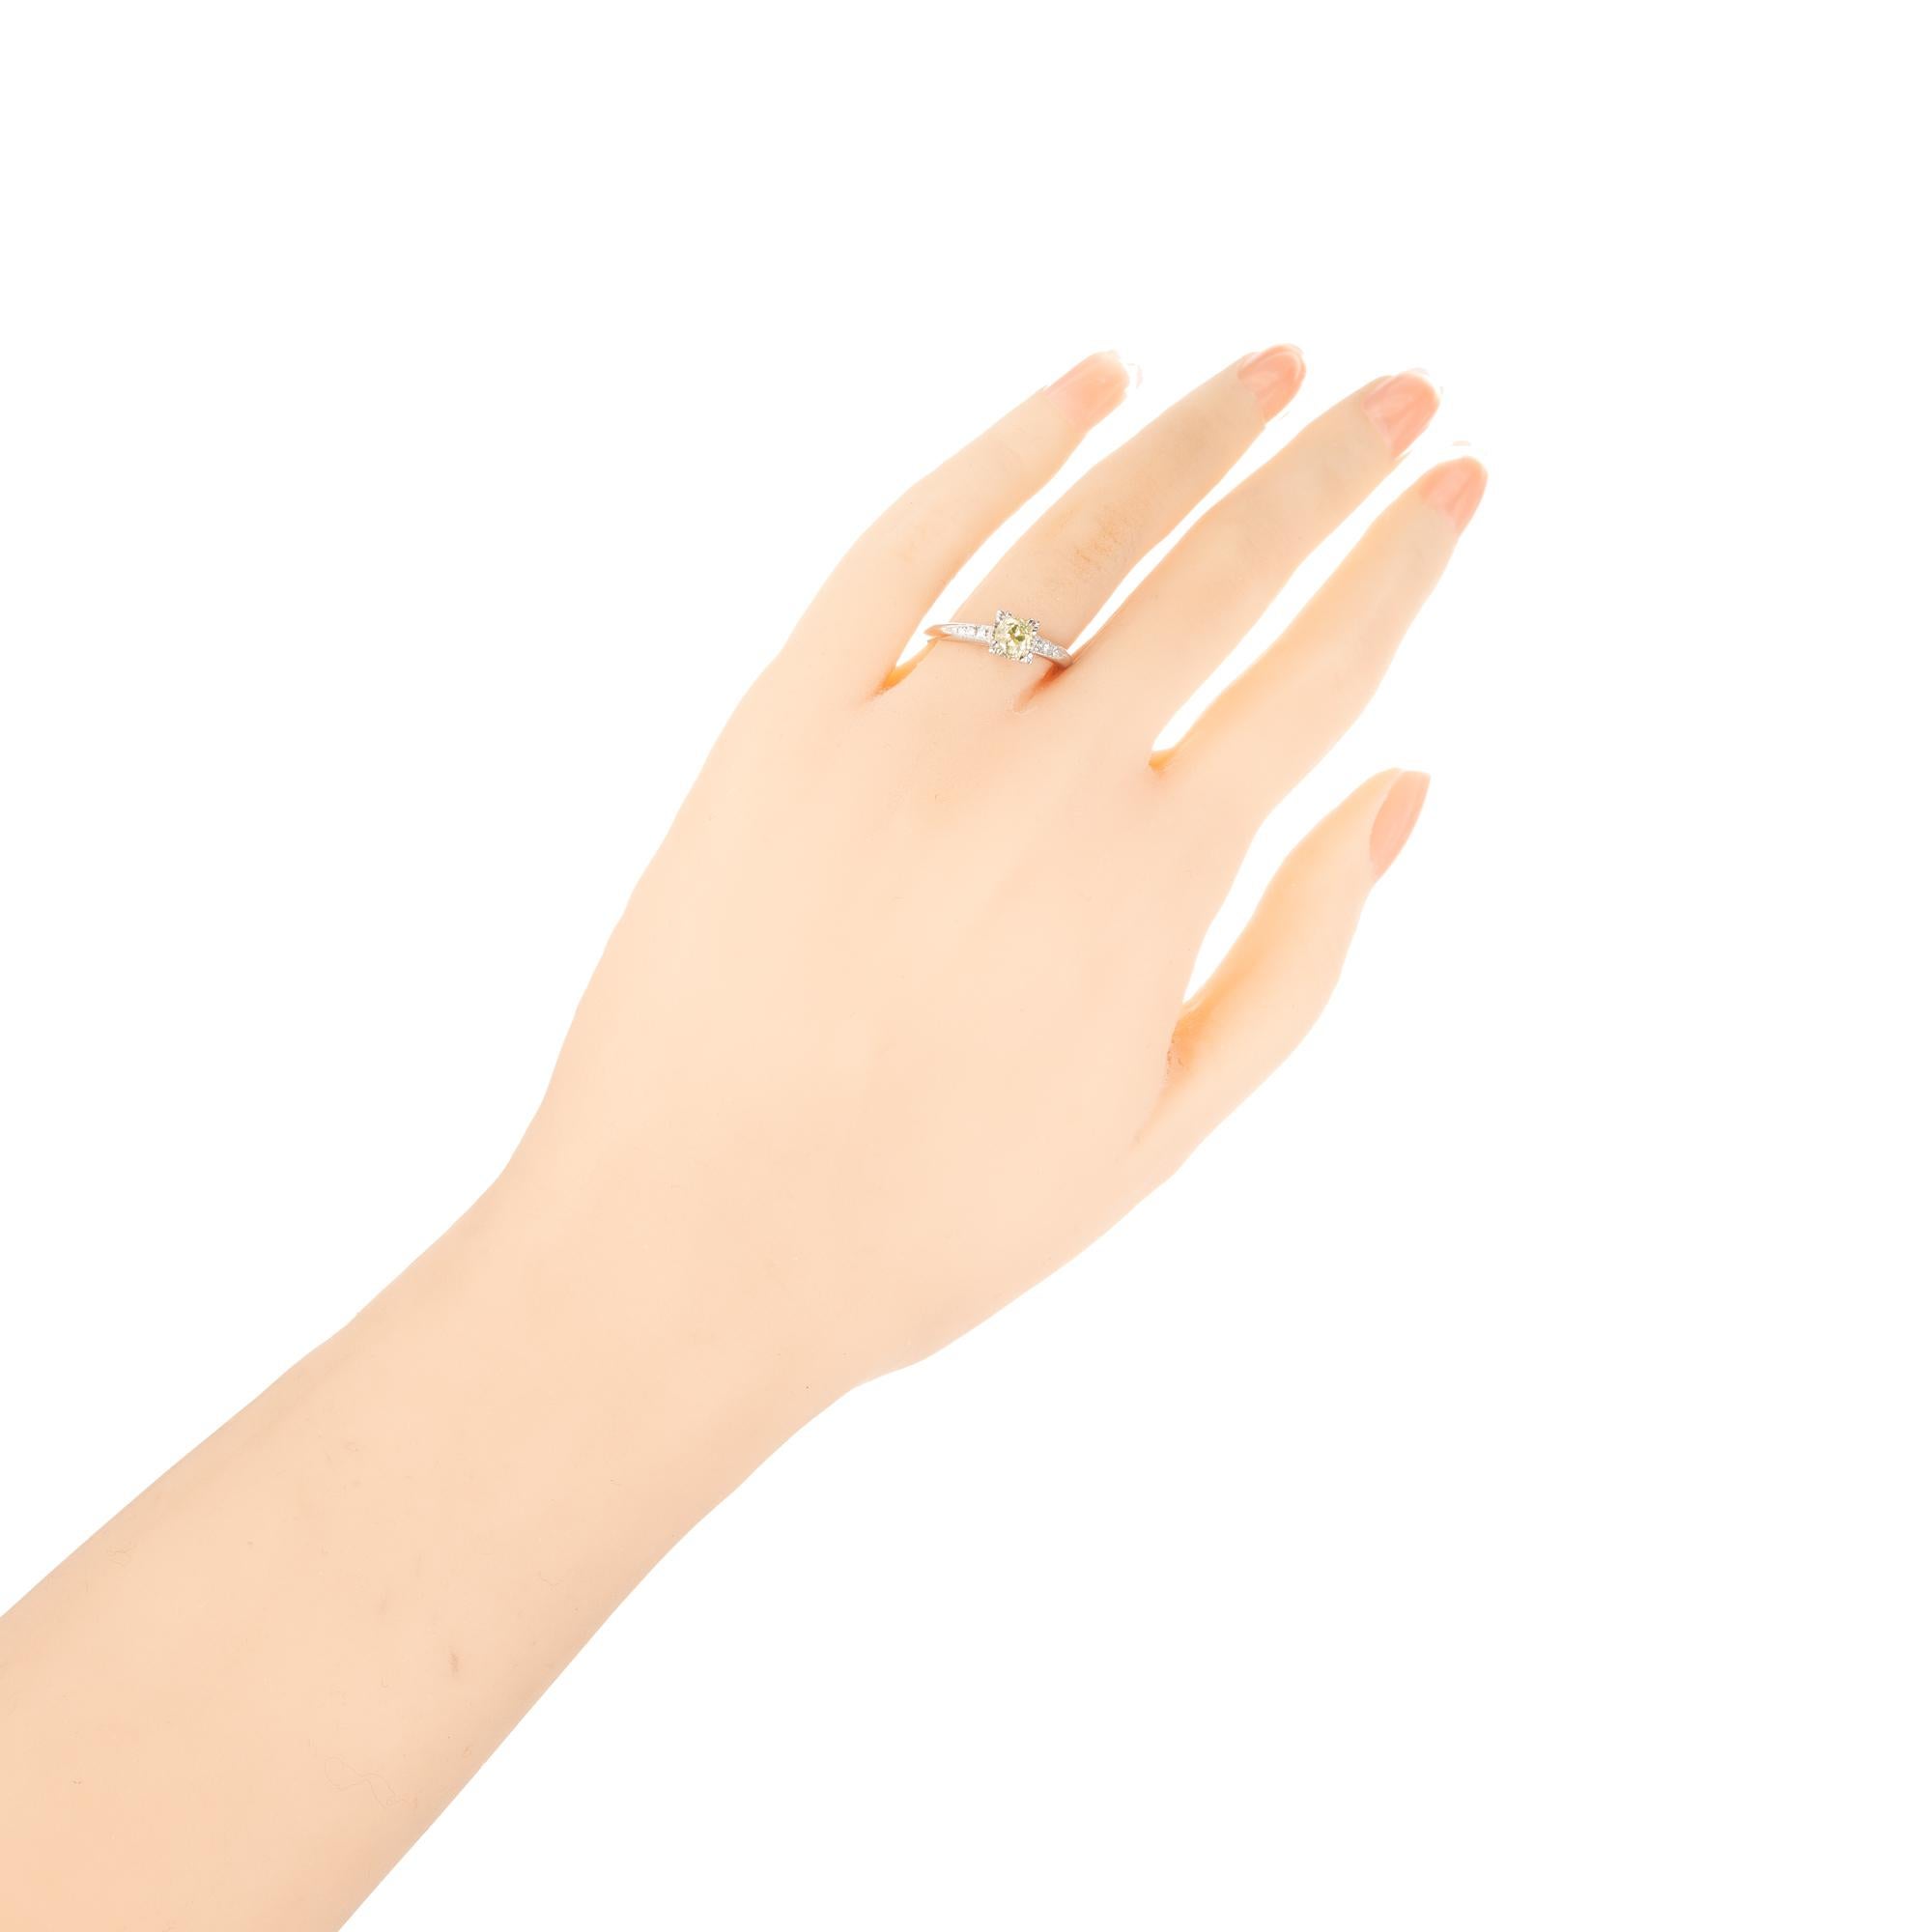 58 carat diamond ring